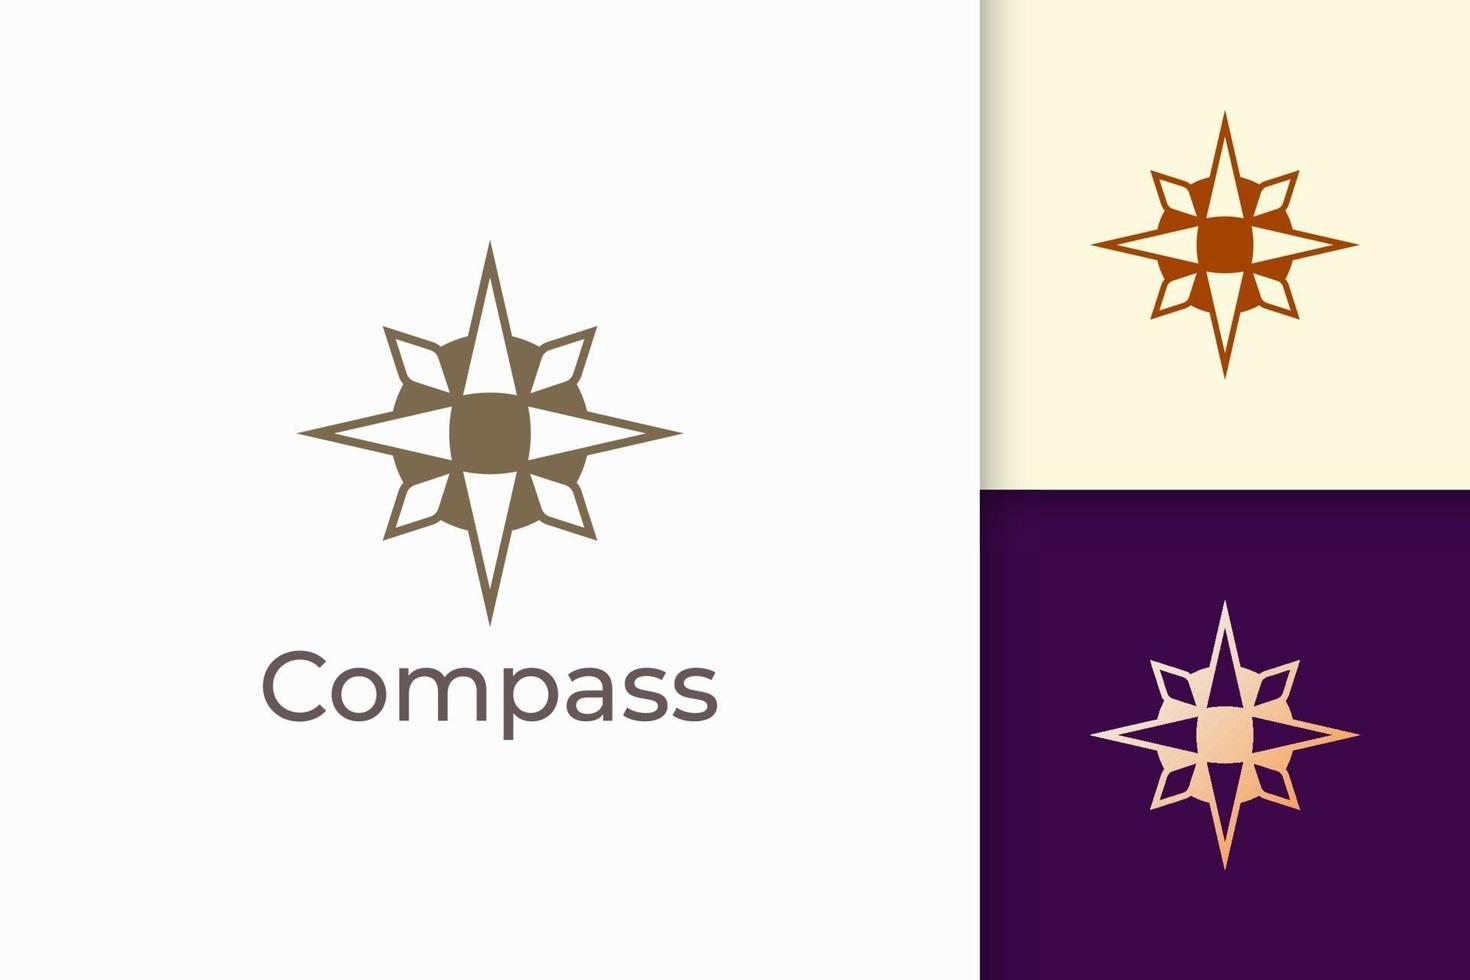 Compass logo in modern shape represent travel or adventure vector